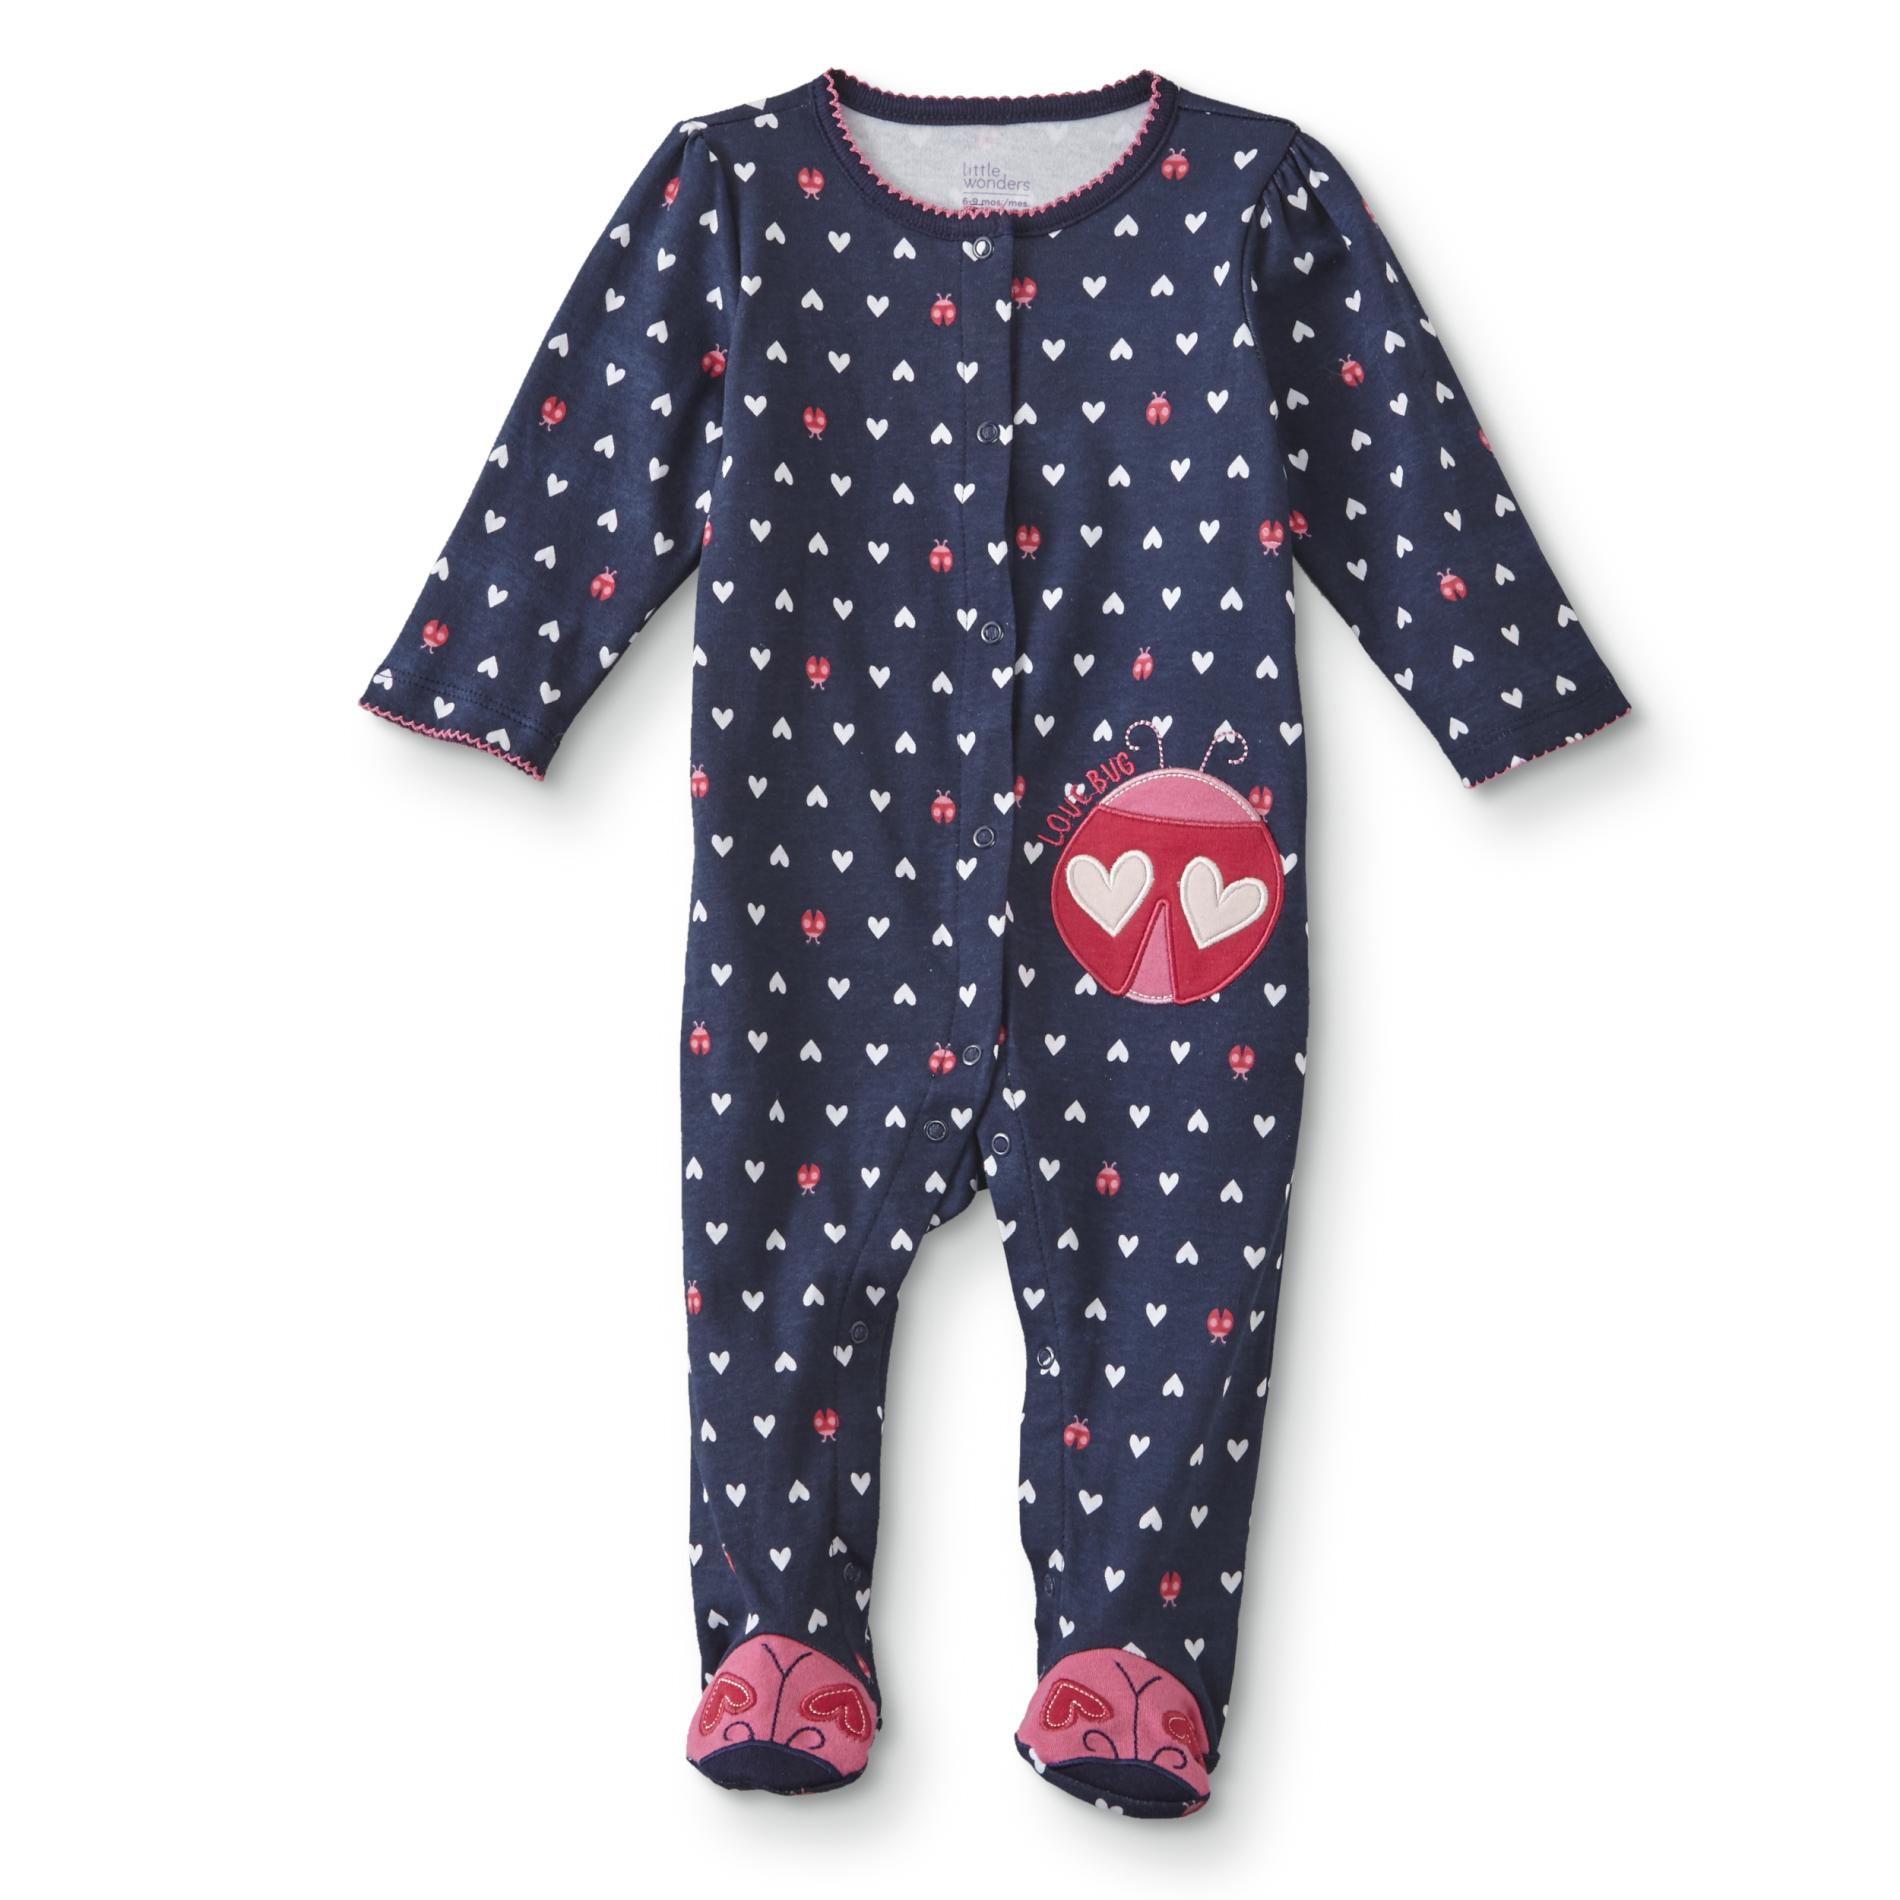 Little Wonders Infant Girls' Sleeper Pajamas - Hearts/Love Bug